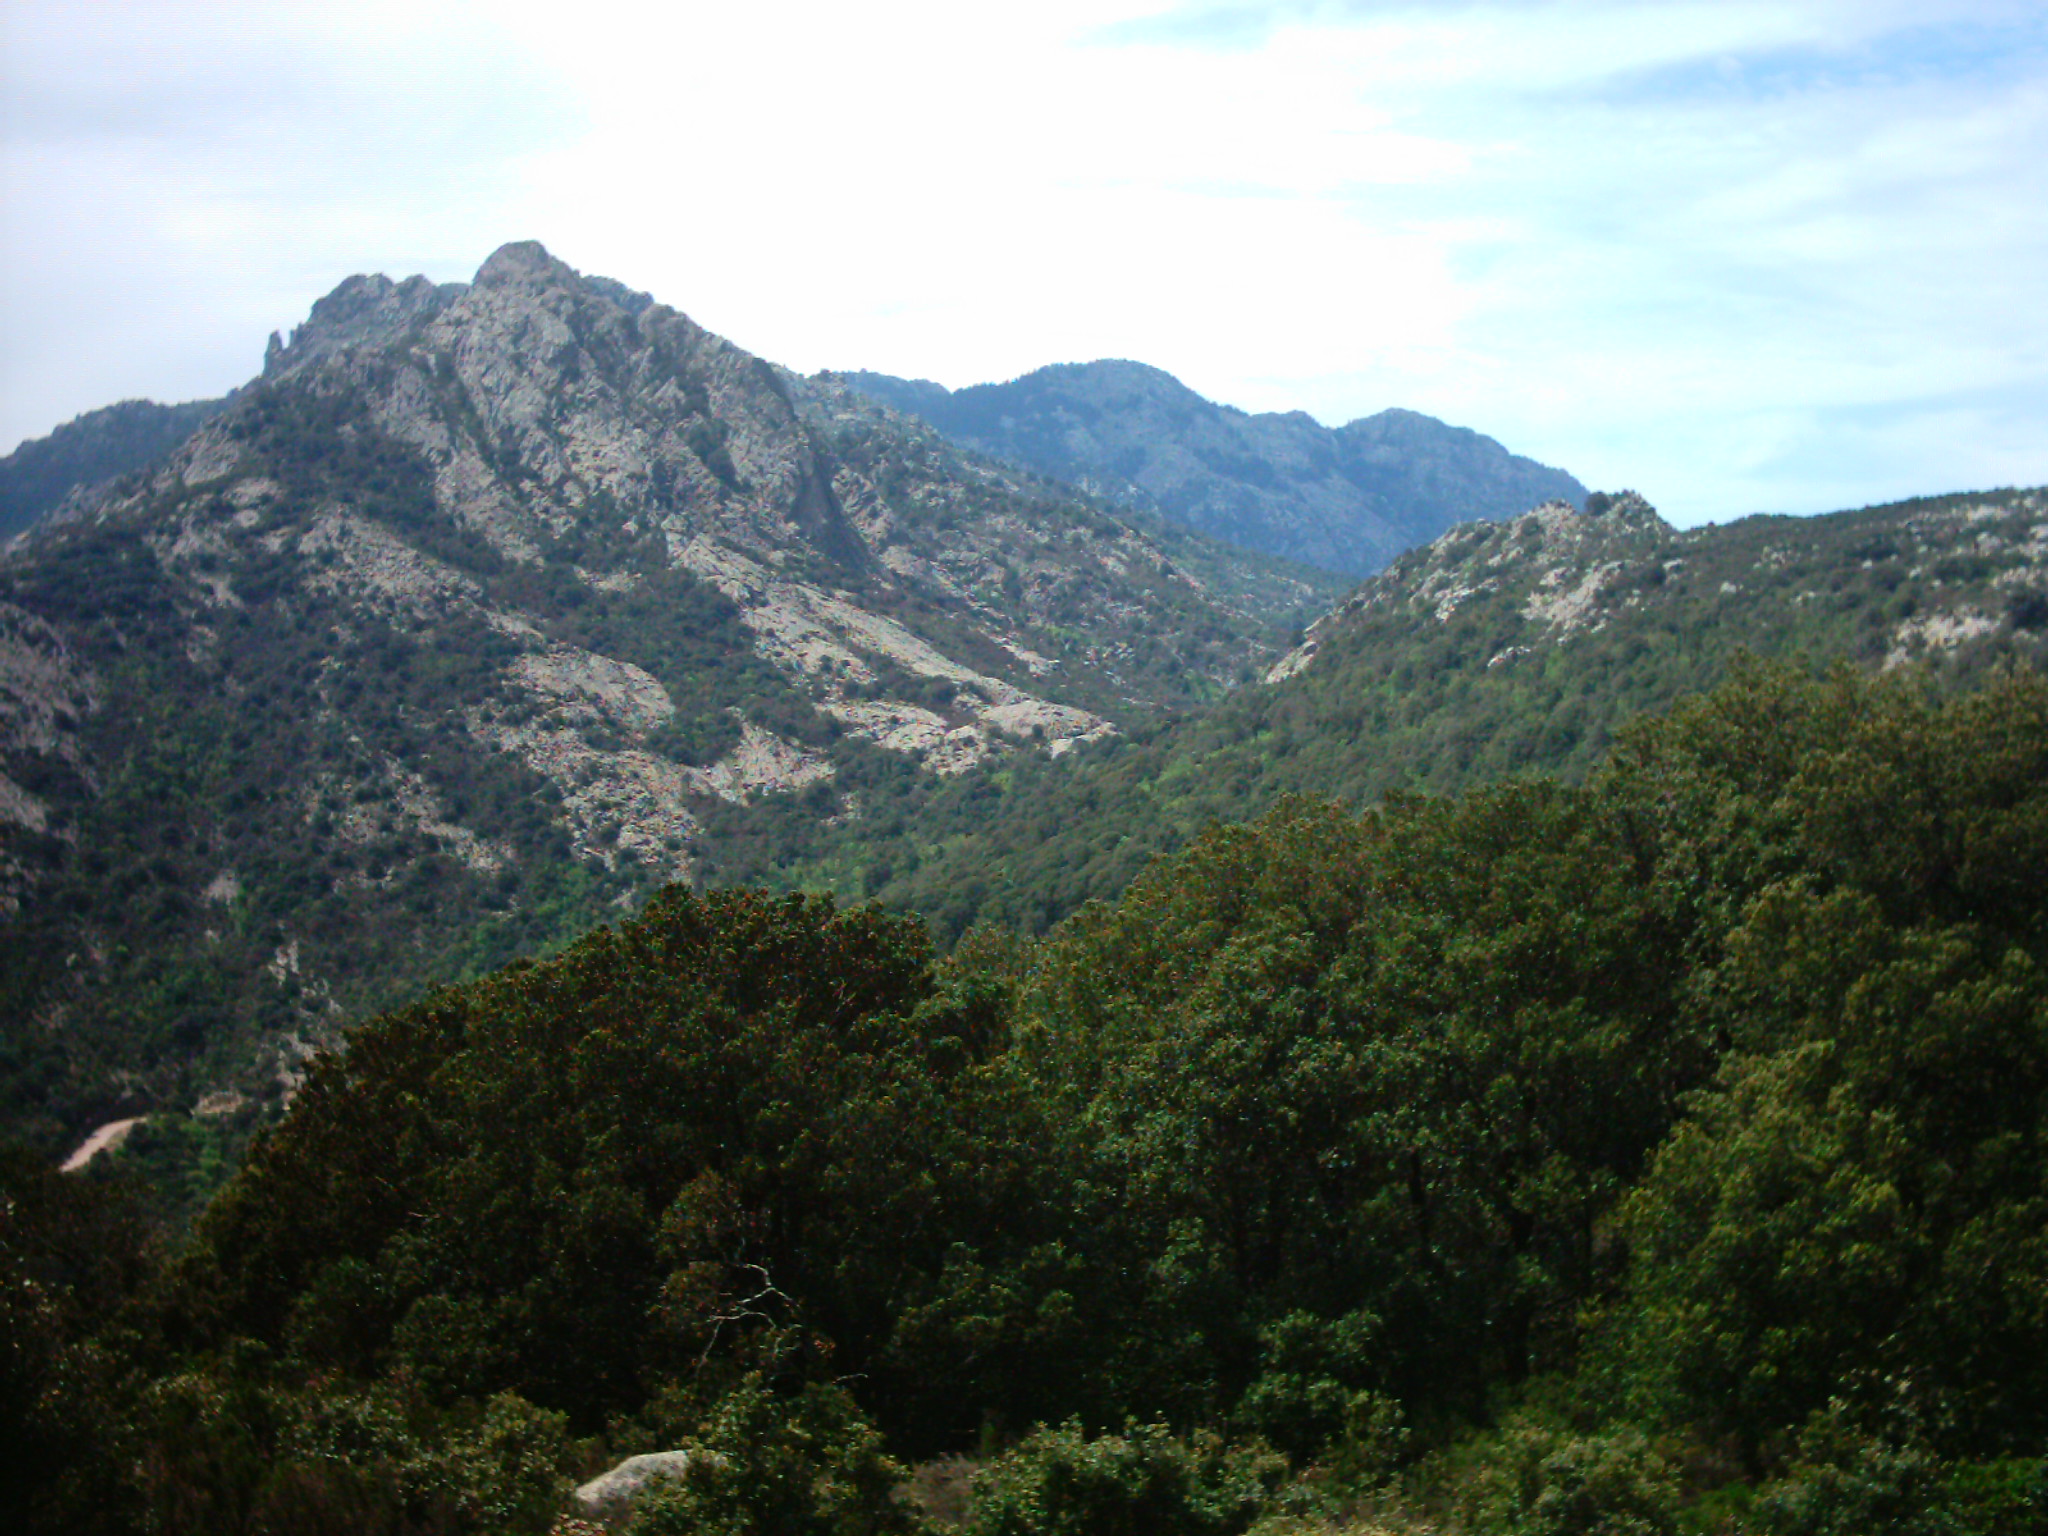 The Mountains surrounding Zonza